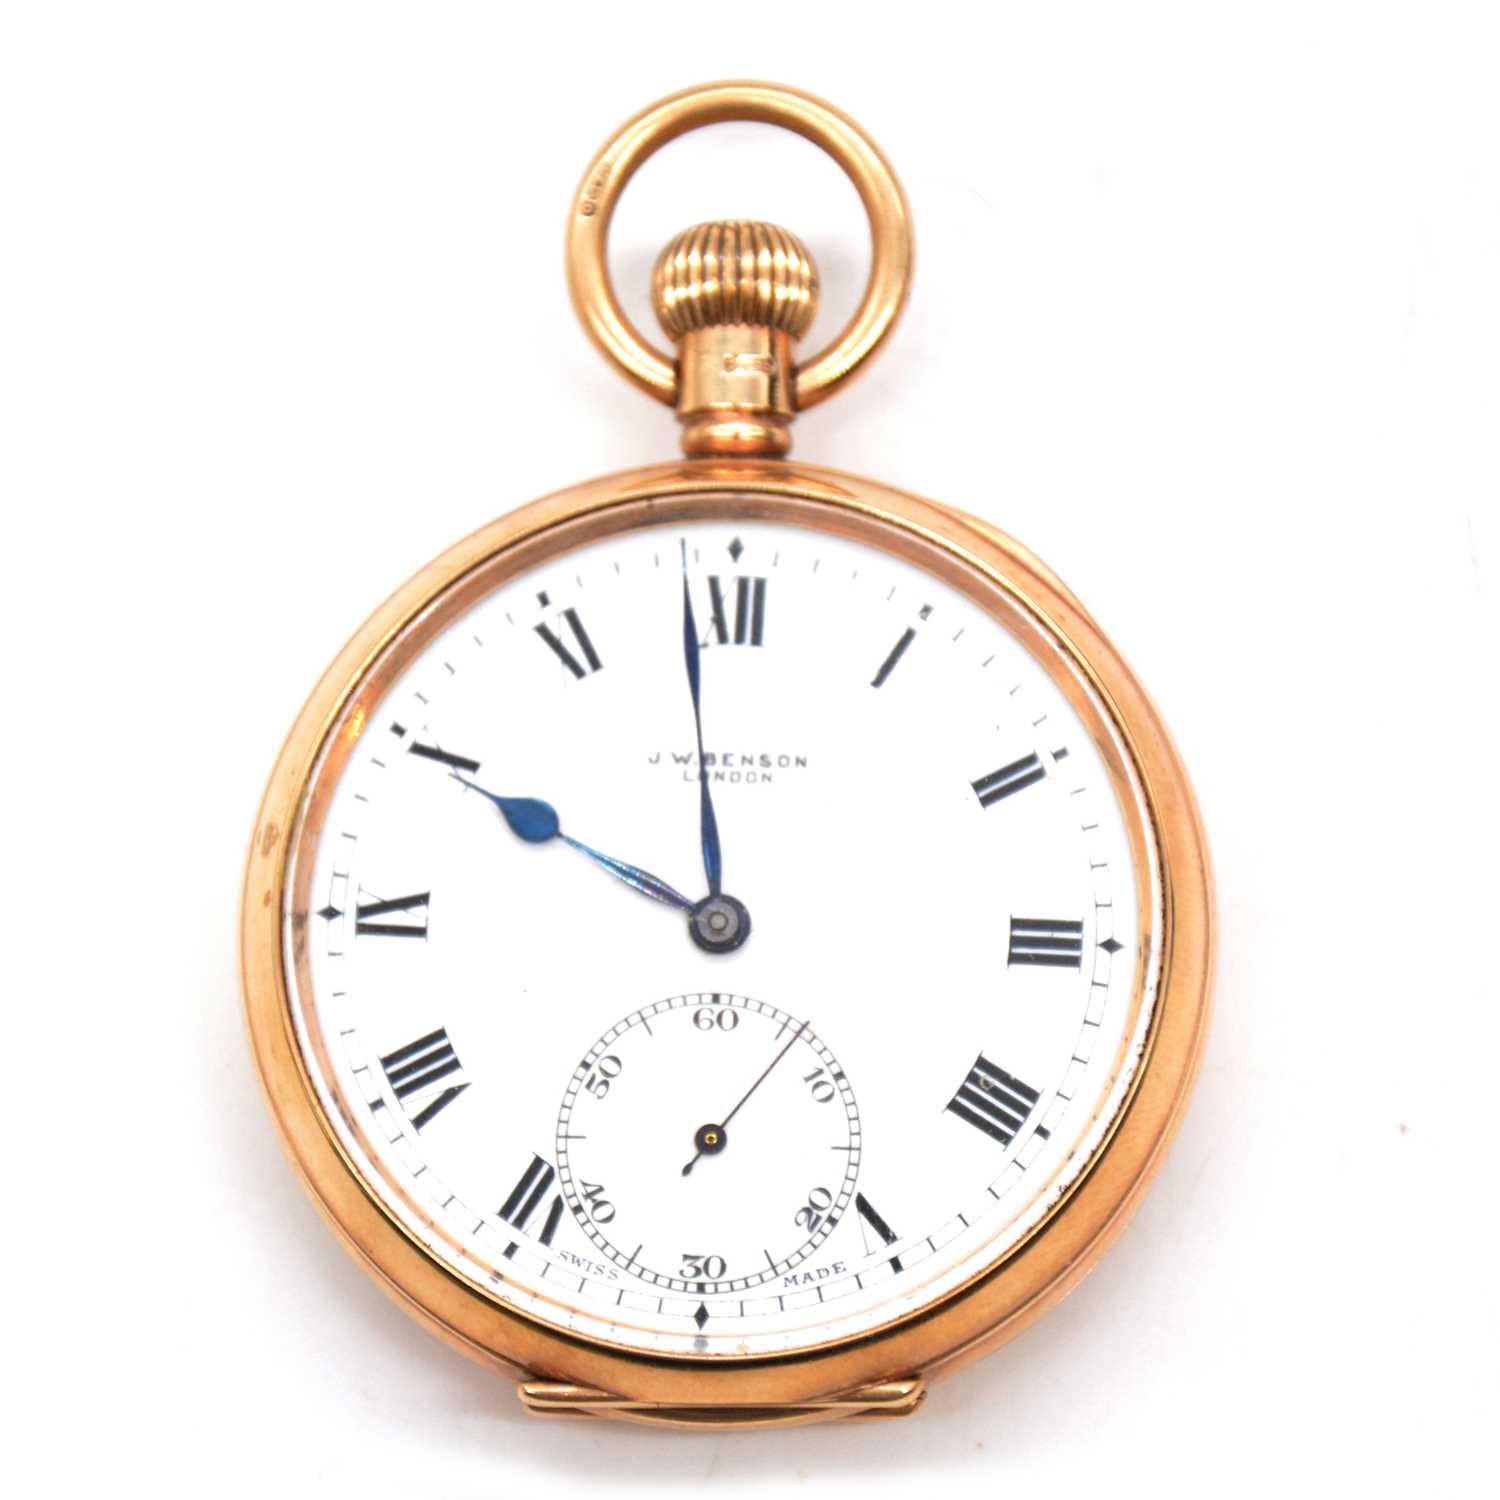 Lot 290 - J W Benson London - a 9 carat gold open face pocket watch.